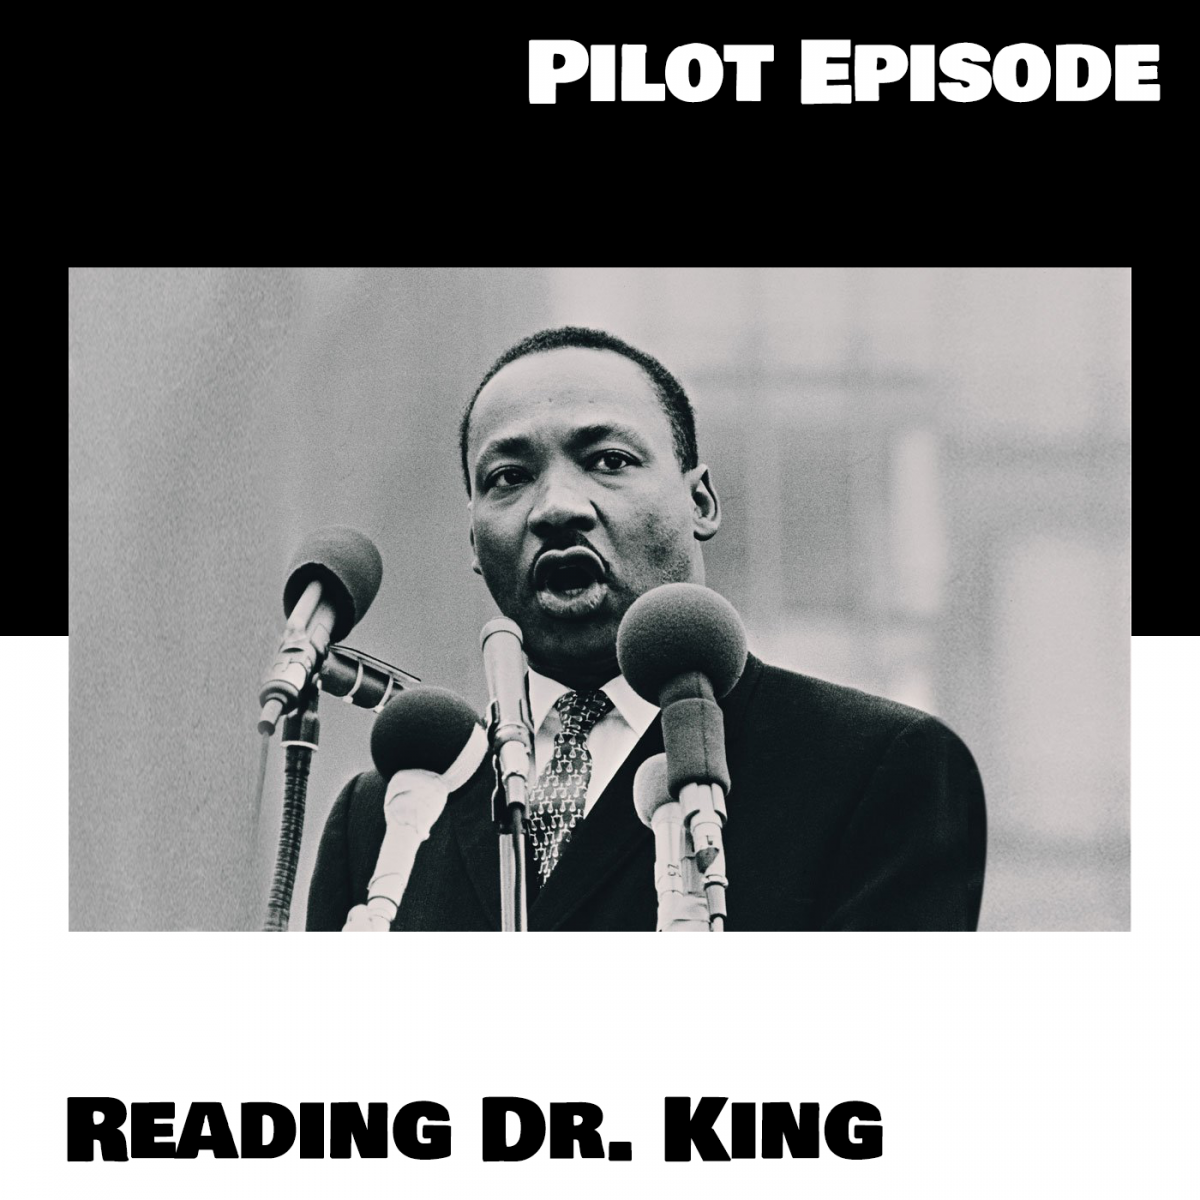 Pilot Episode: Reading Dr. King